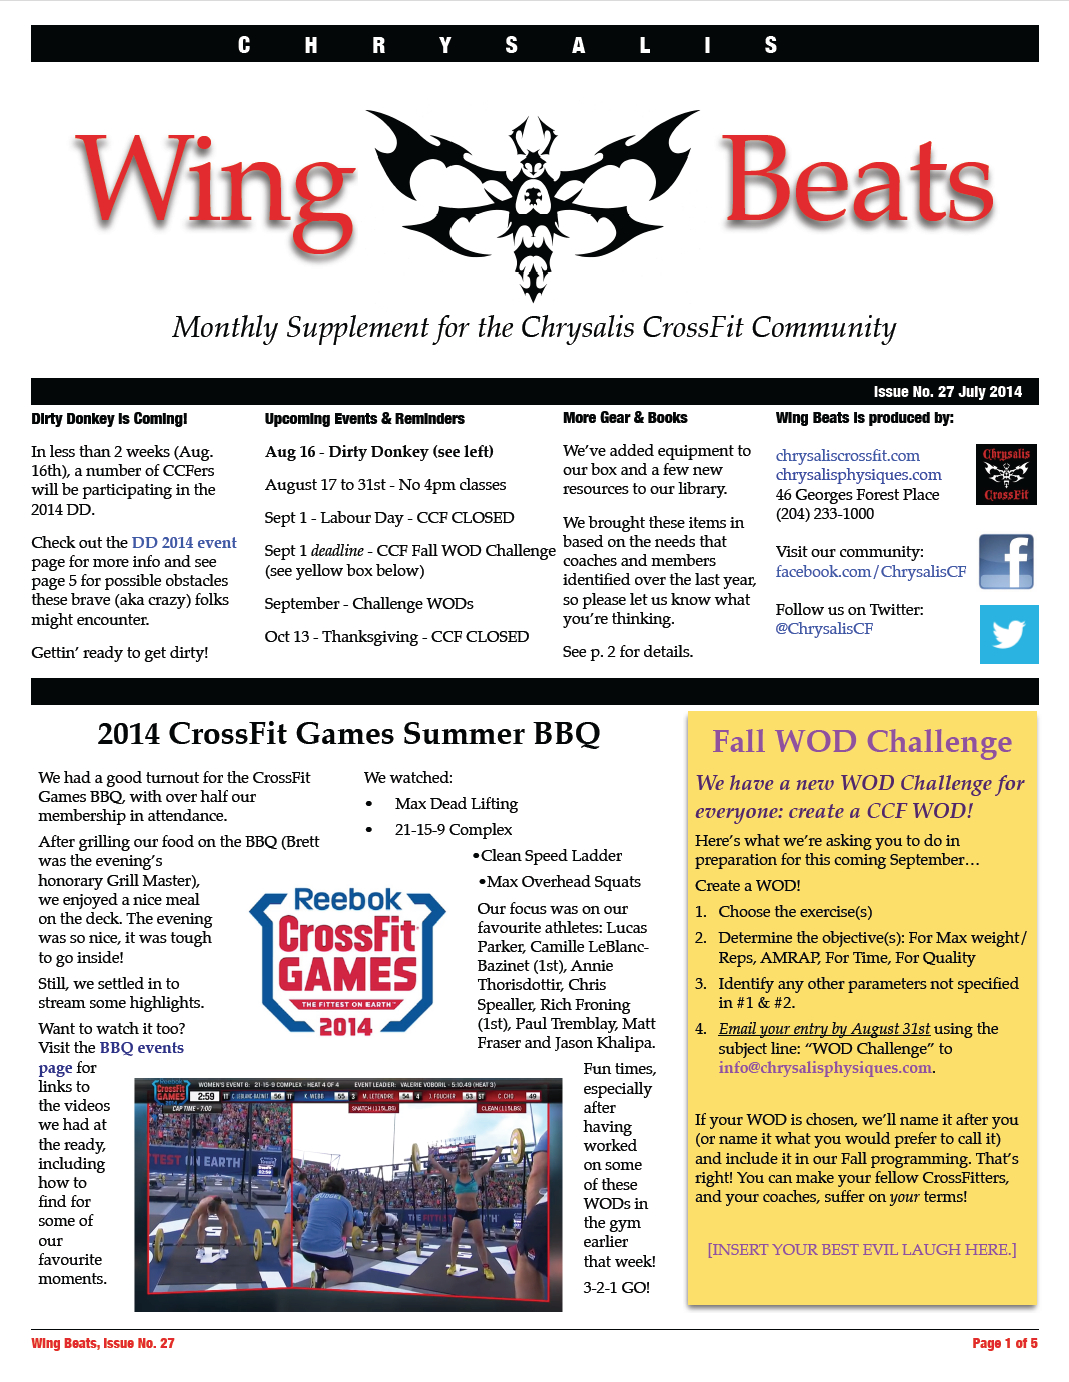 WingBeats Issue #27 - July 2014